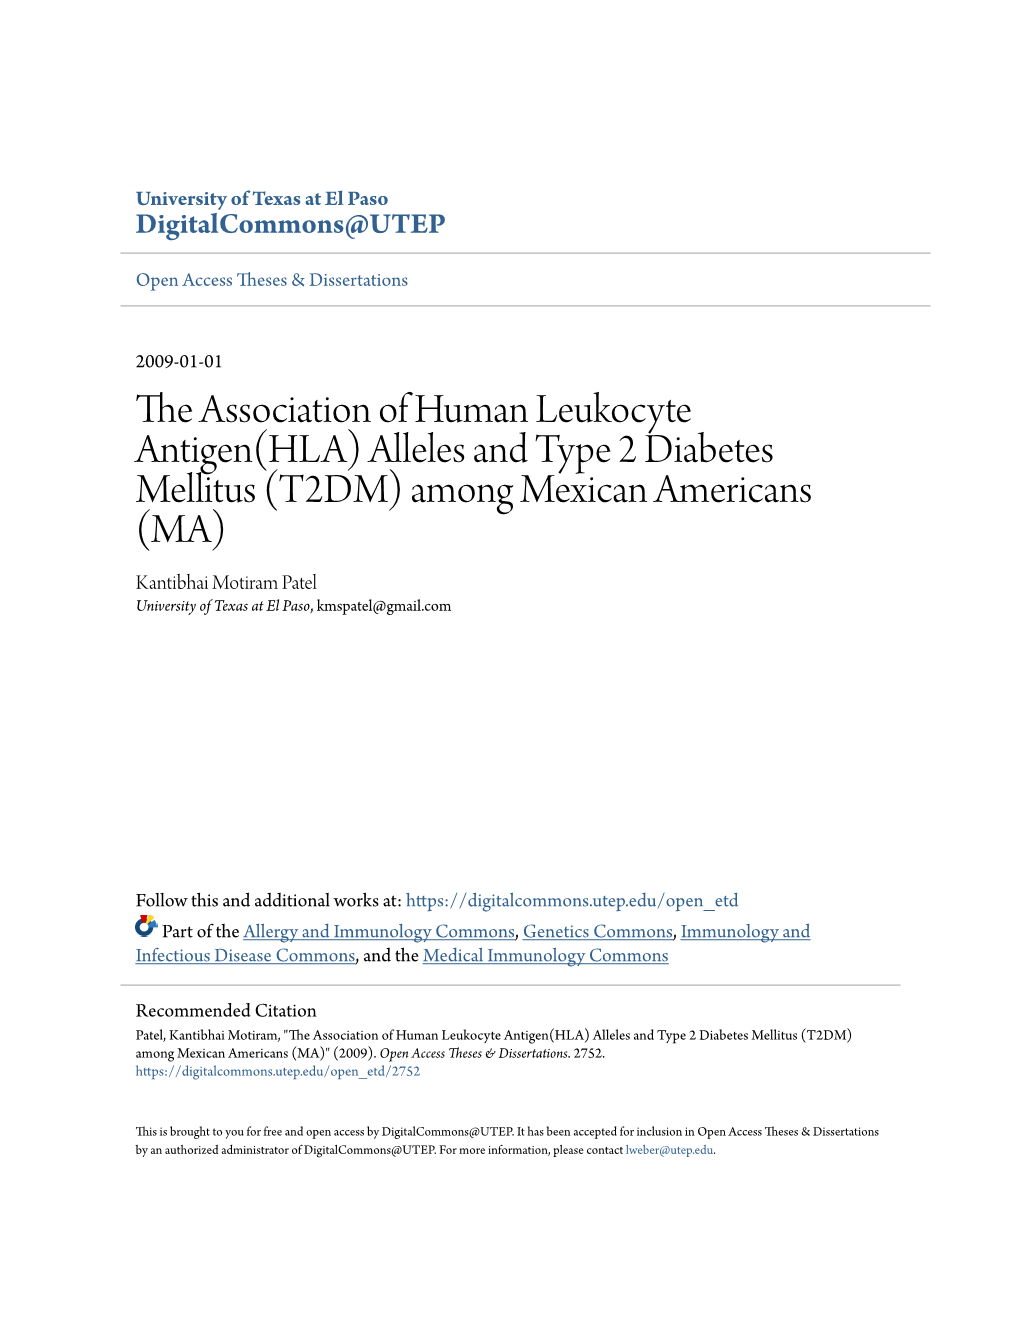 The Association of Human Leukocyte Antigen(HLA)